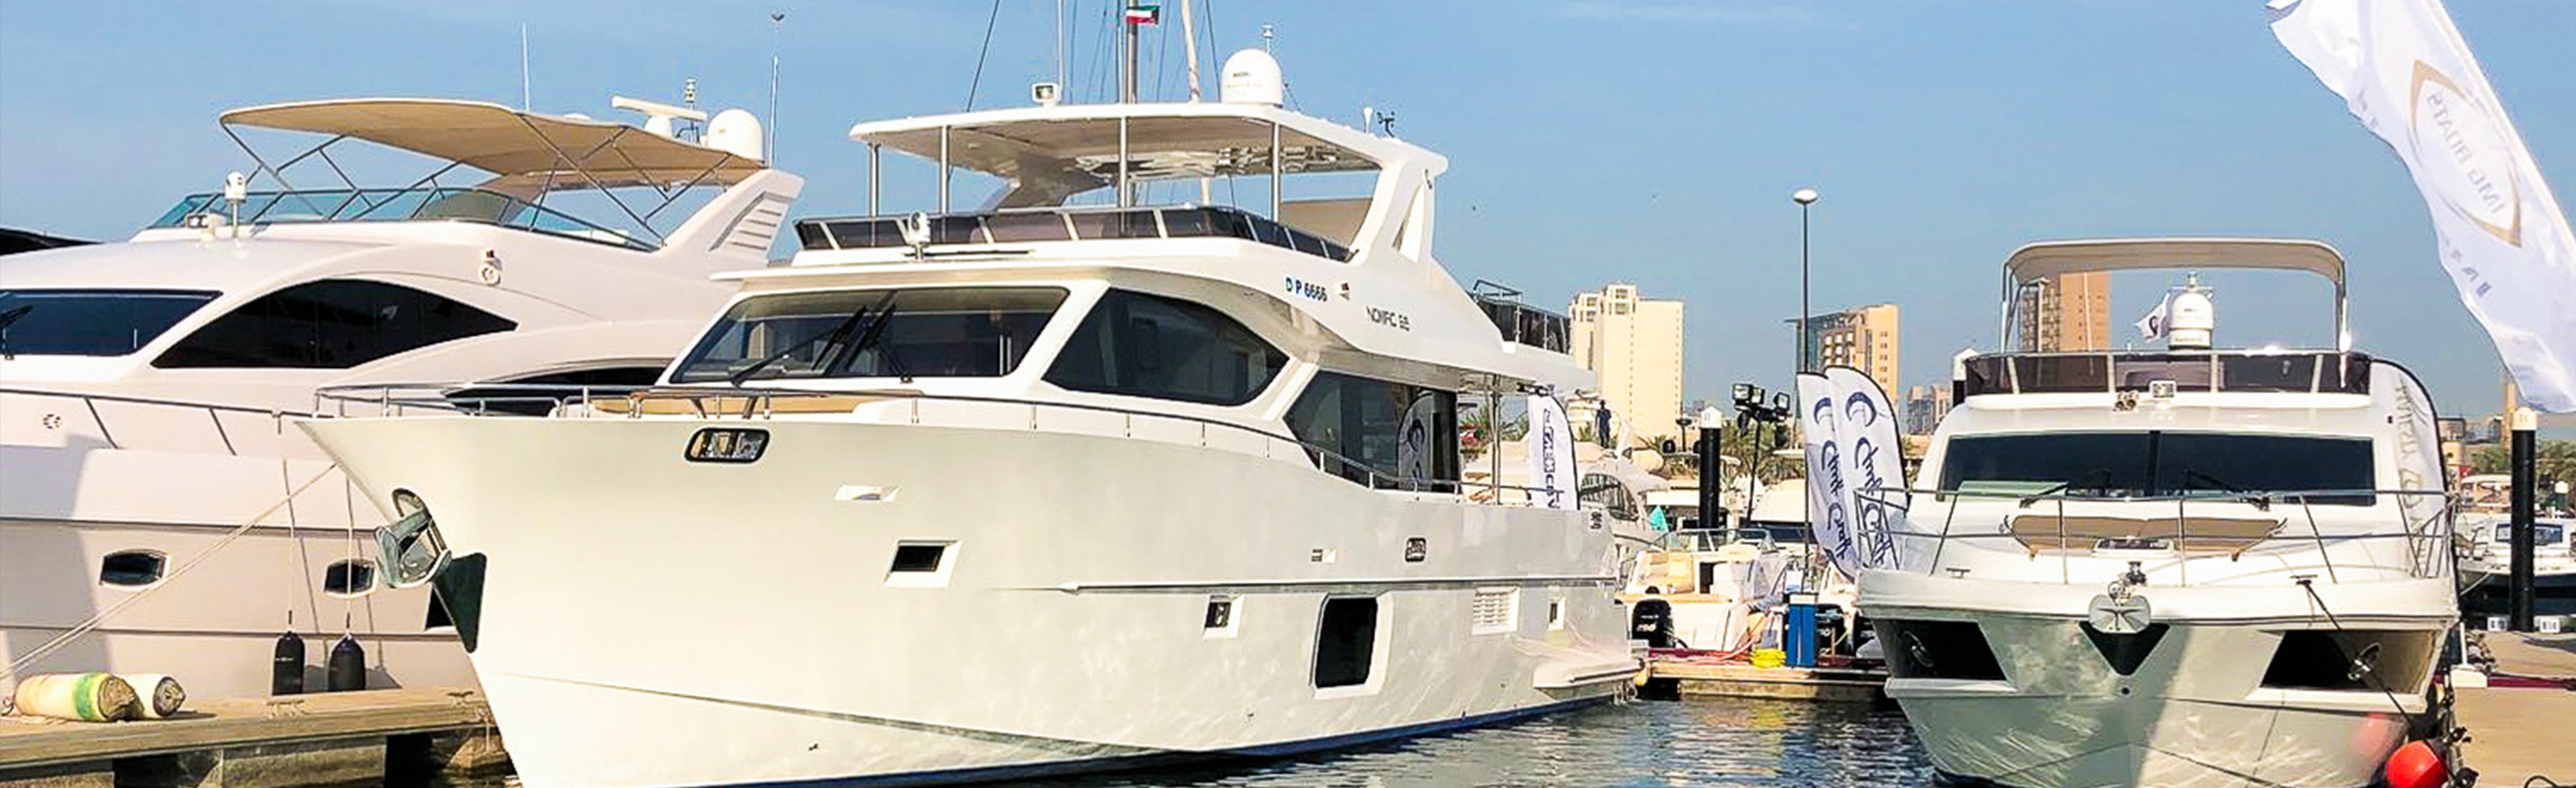 Gulf-Craft,-Kuwait-Yacht-Show